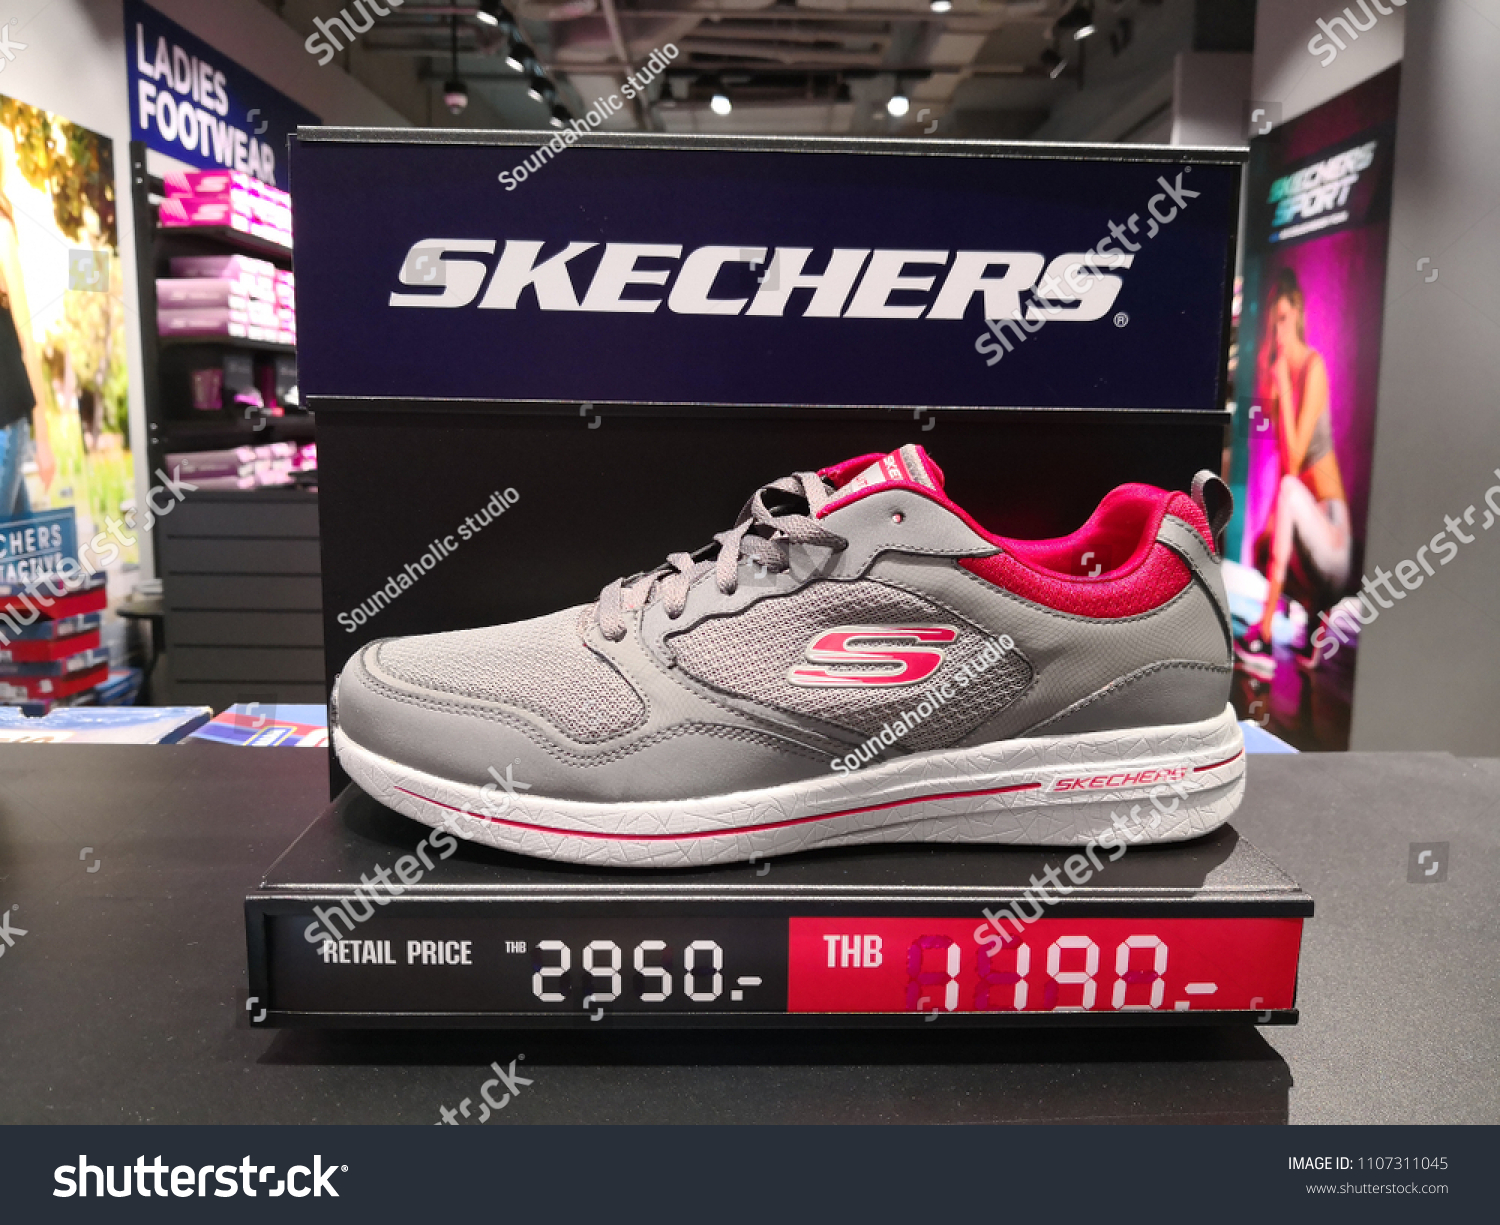 skechers shoes america